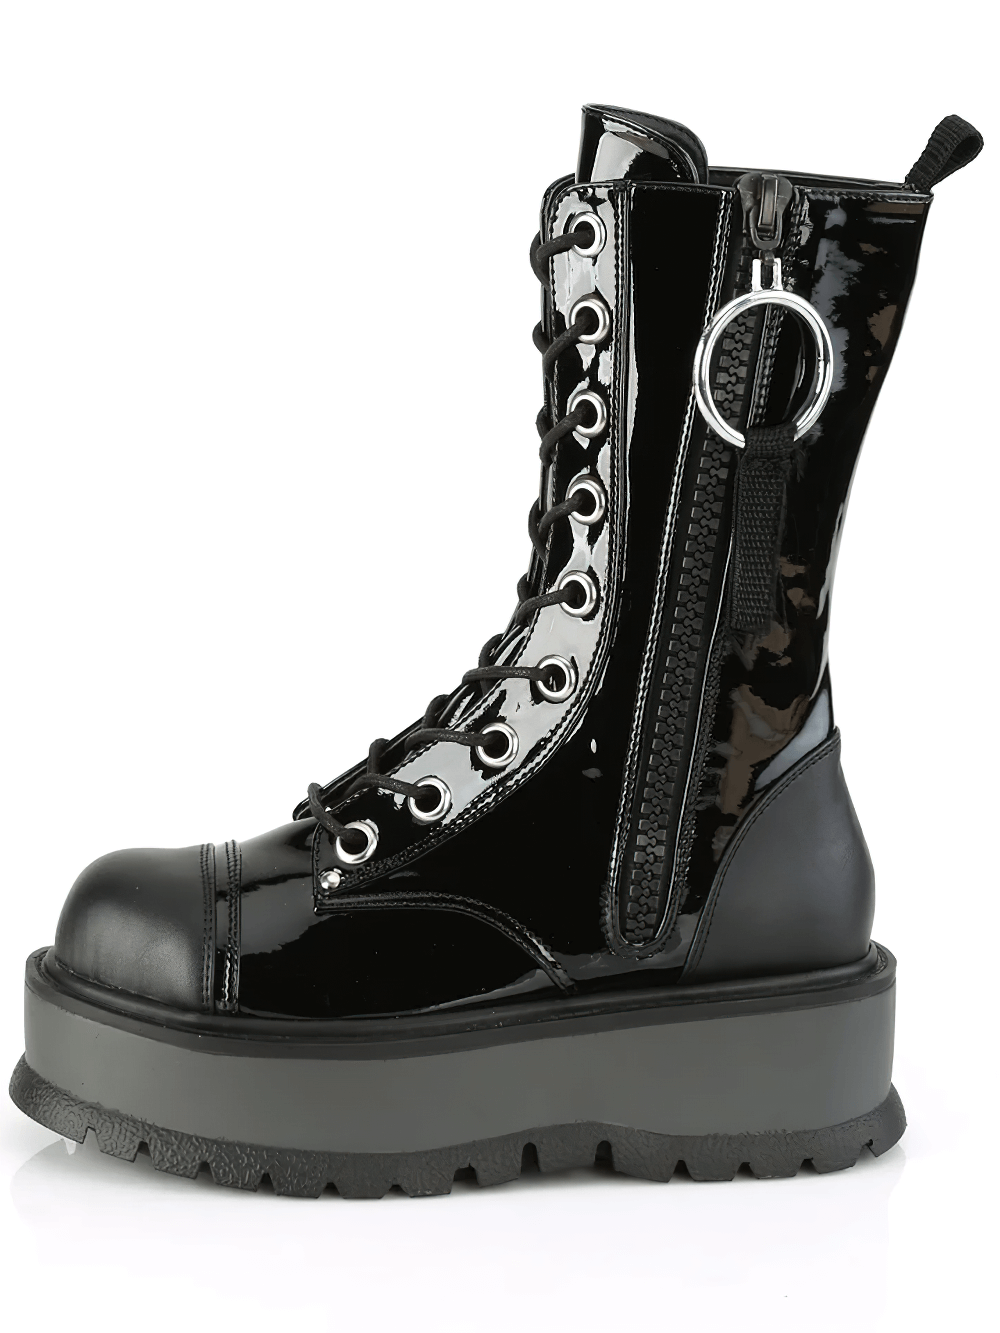 DEMONIA Edgy Black Lace-Up Mid-Calf Platform Boots